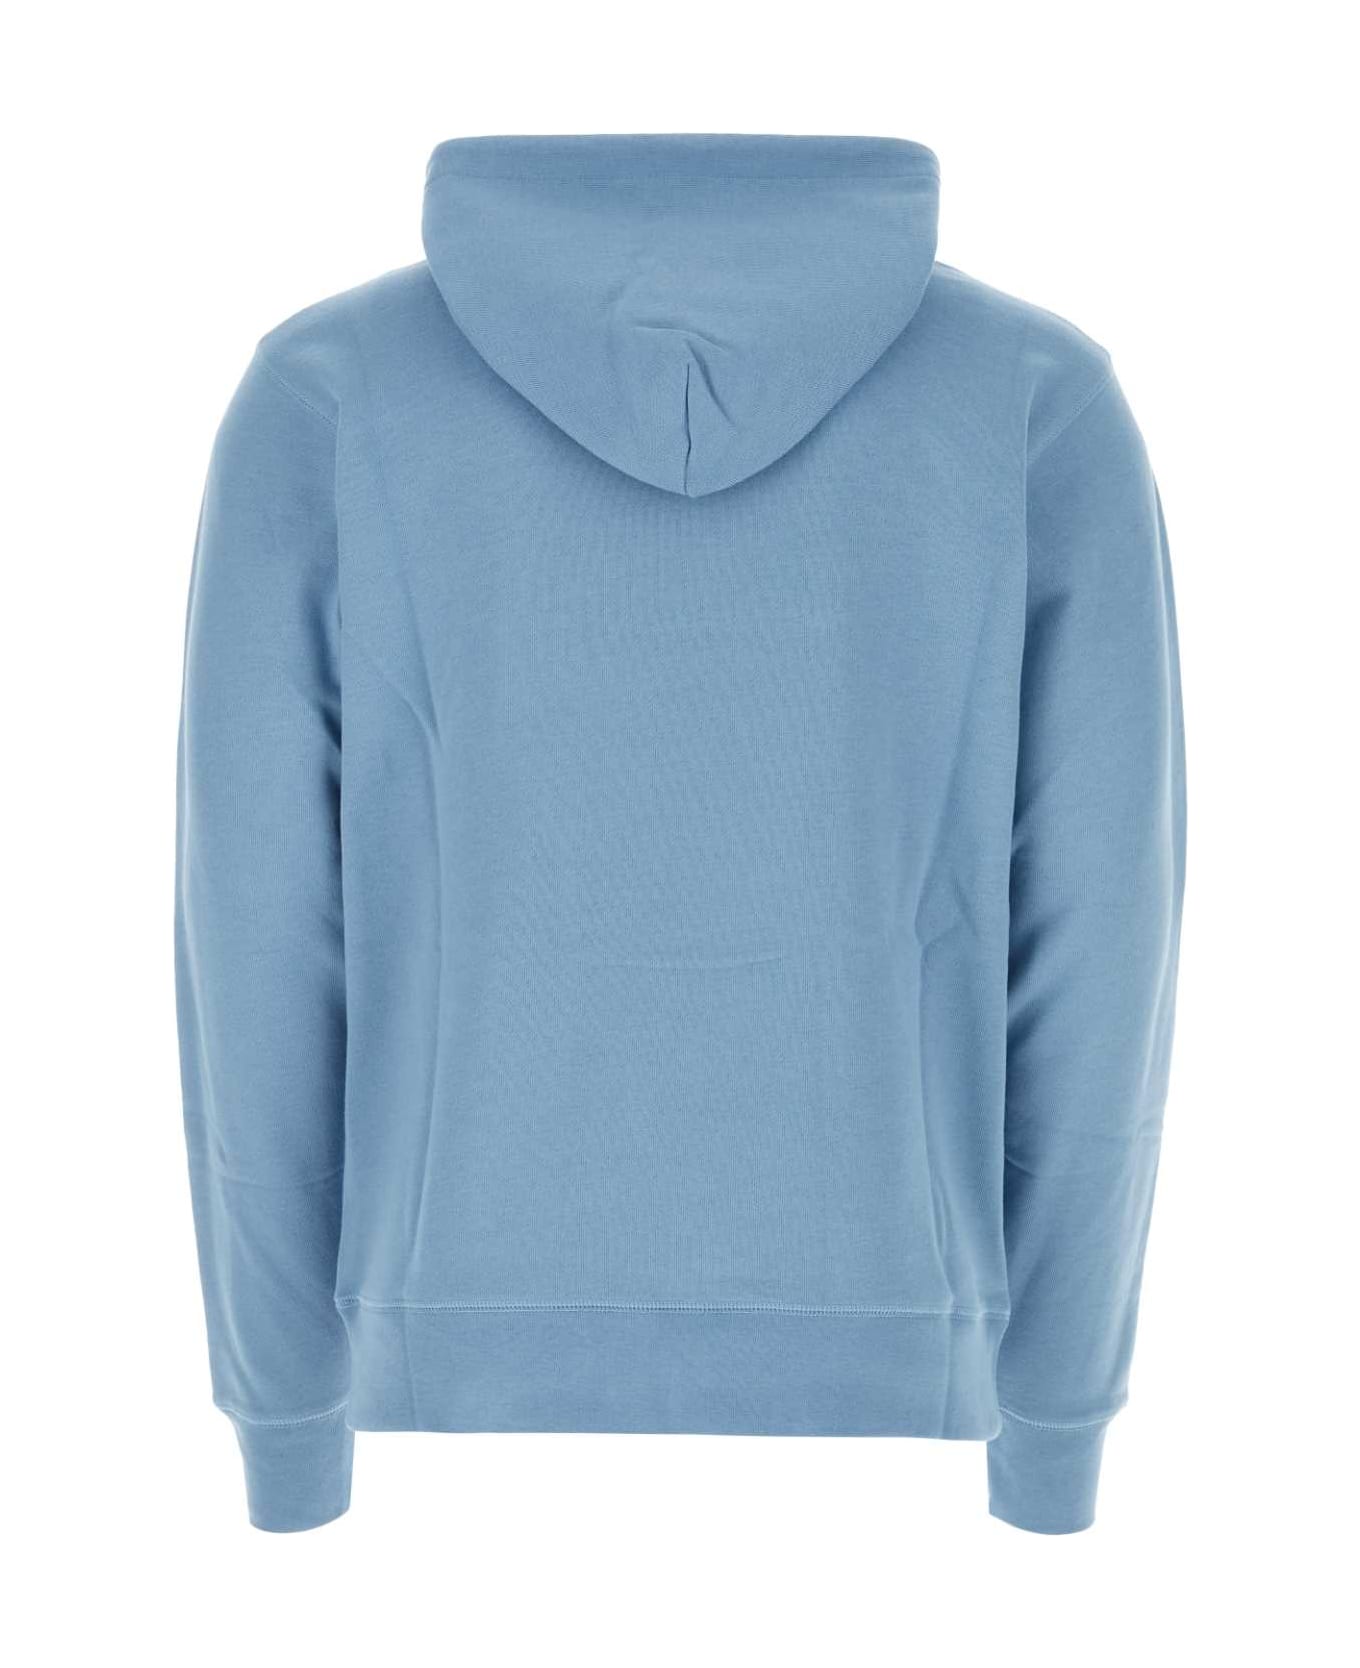 Billionaire Boys Club Light Blue Cotton Sweatshirt - POWDERBLUE